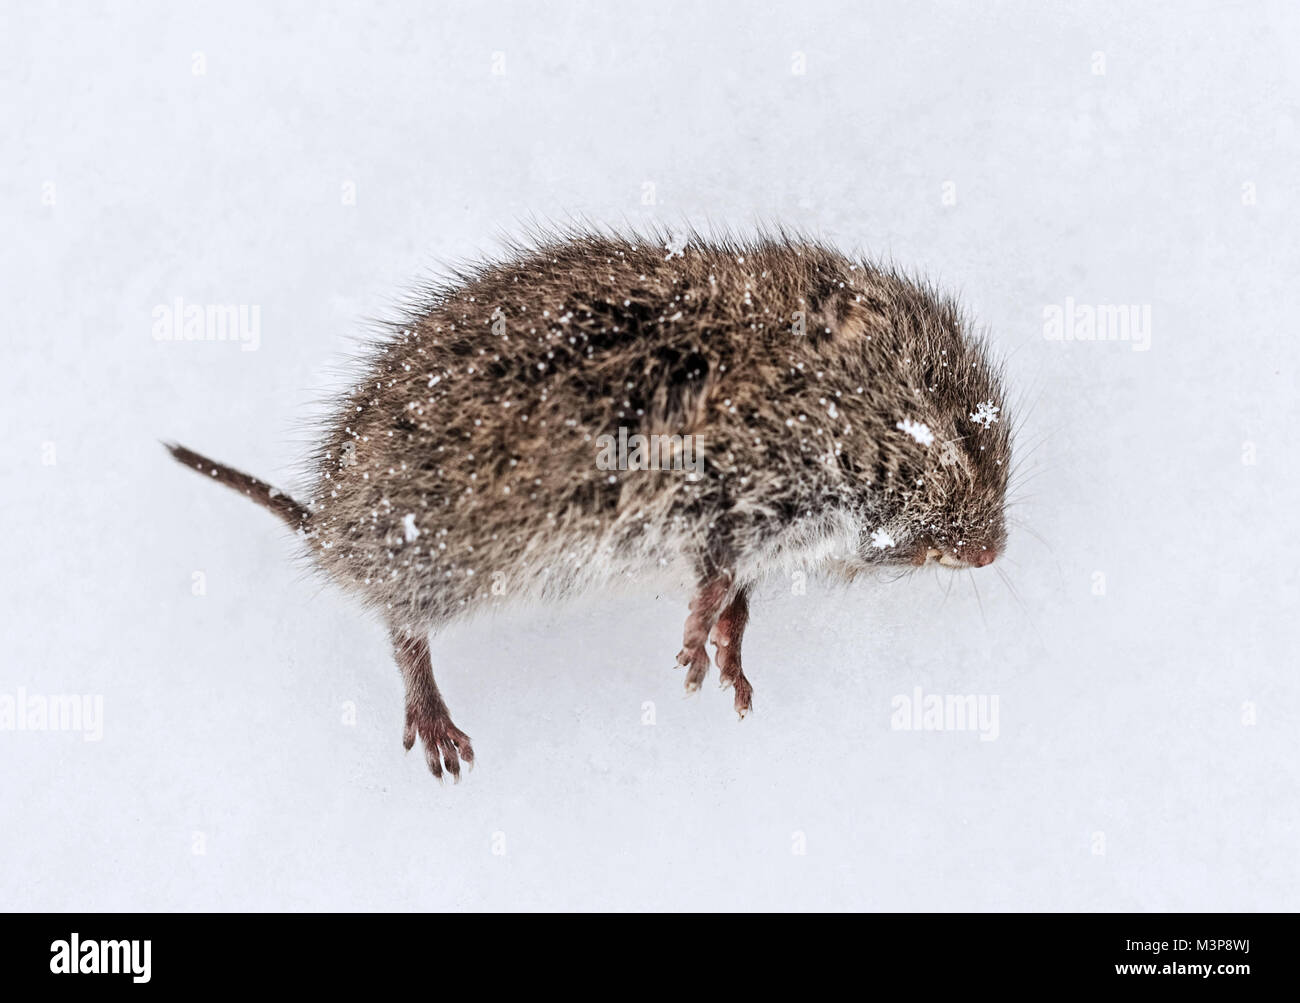 Rata congelada fotografías e imágenes de alta resolución - Alamy